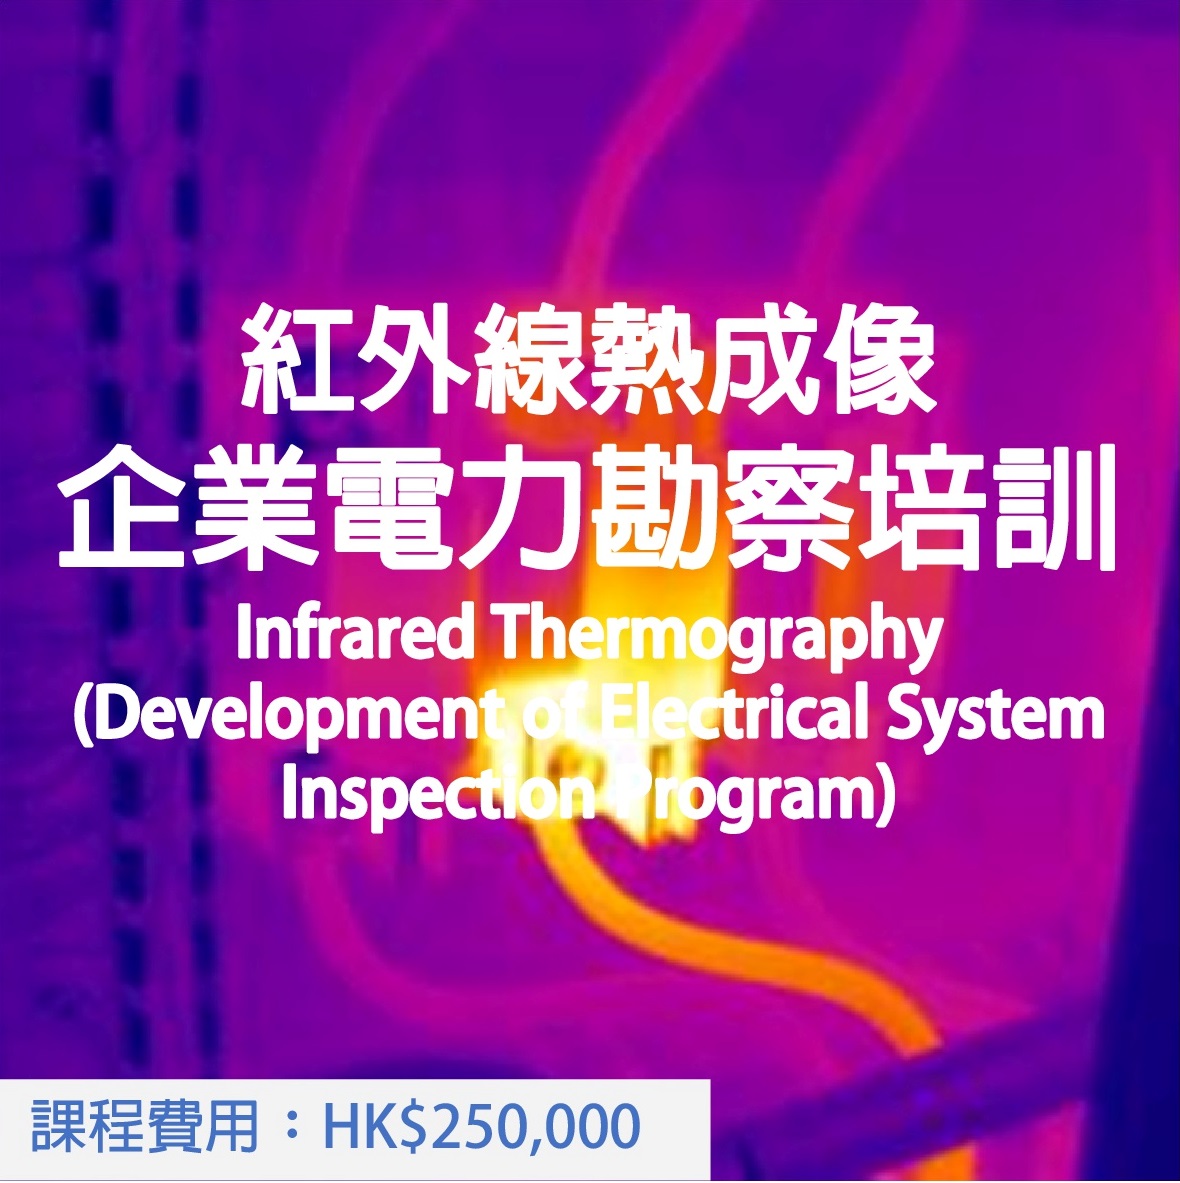 紅外線熱成像(企業電力勘察培訓) | Infrared Thermography (Development of Electrical System Inspection Program)